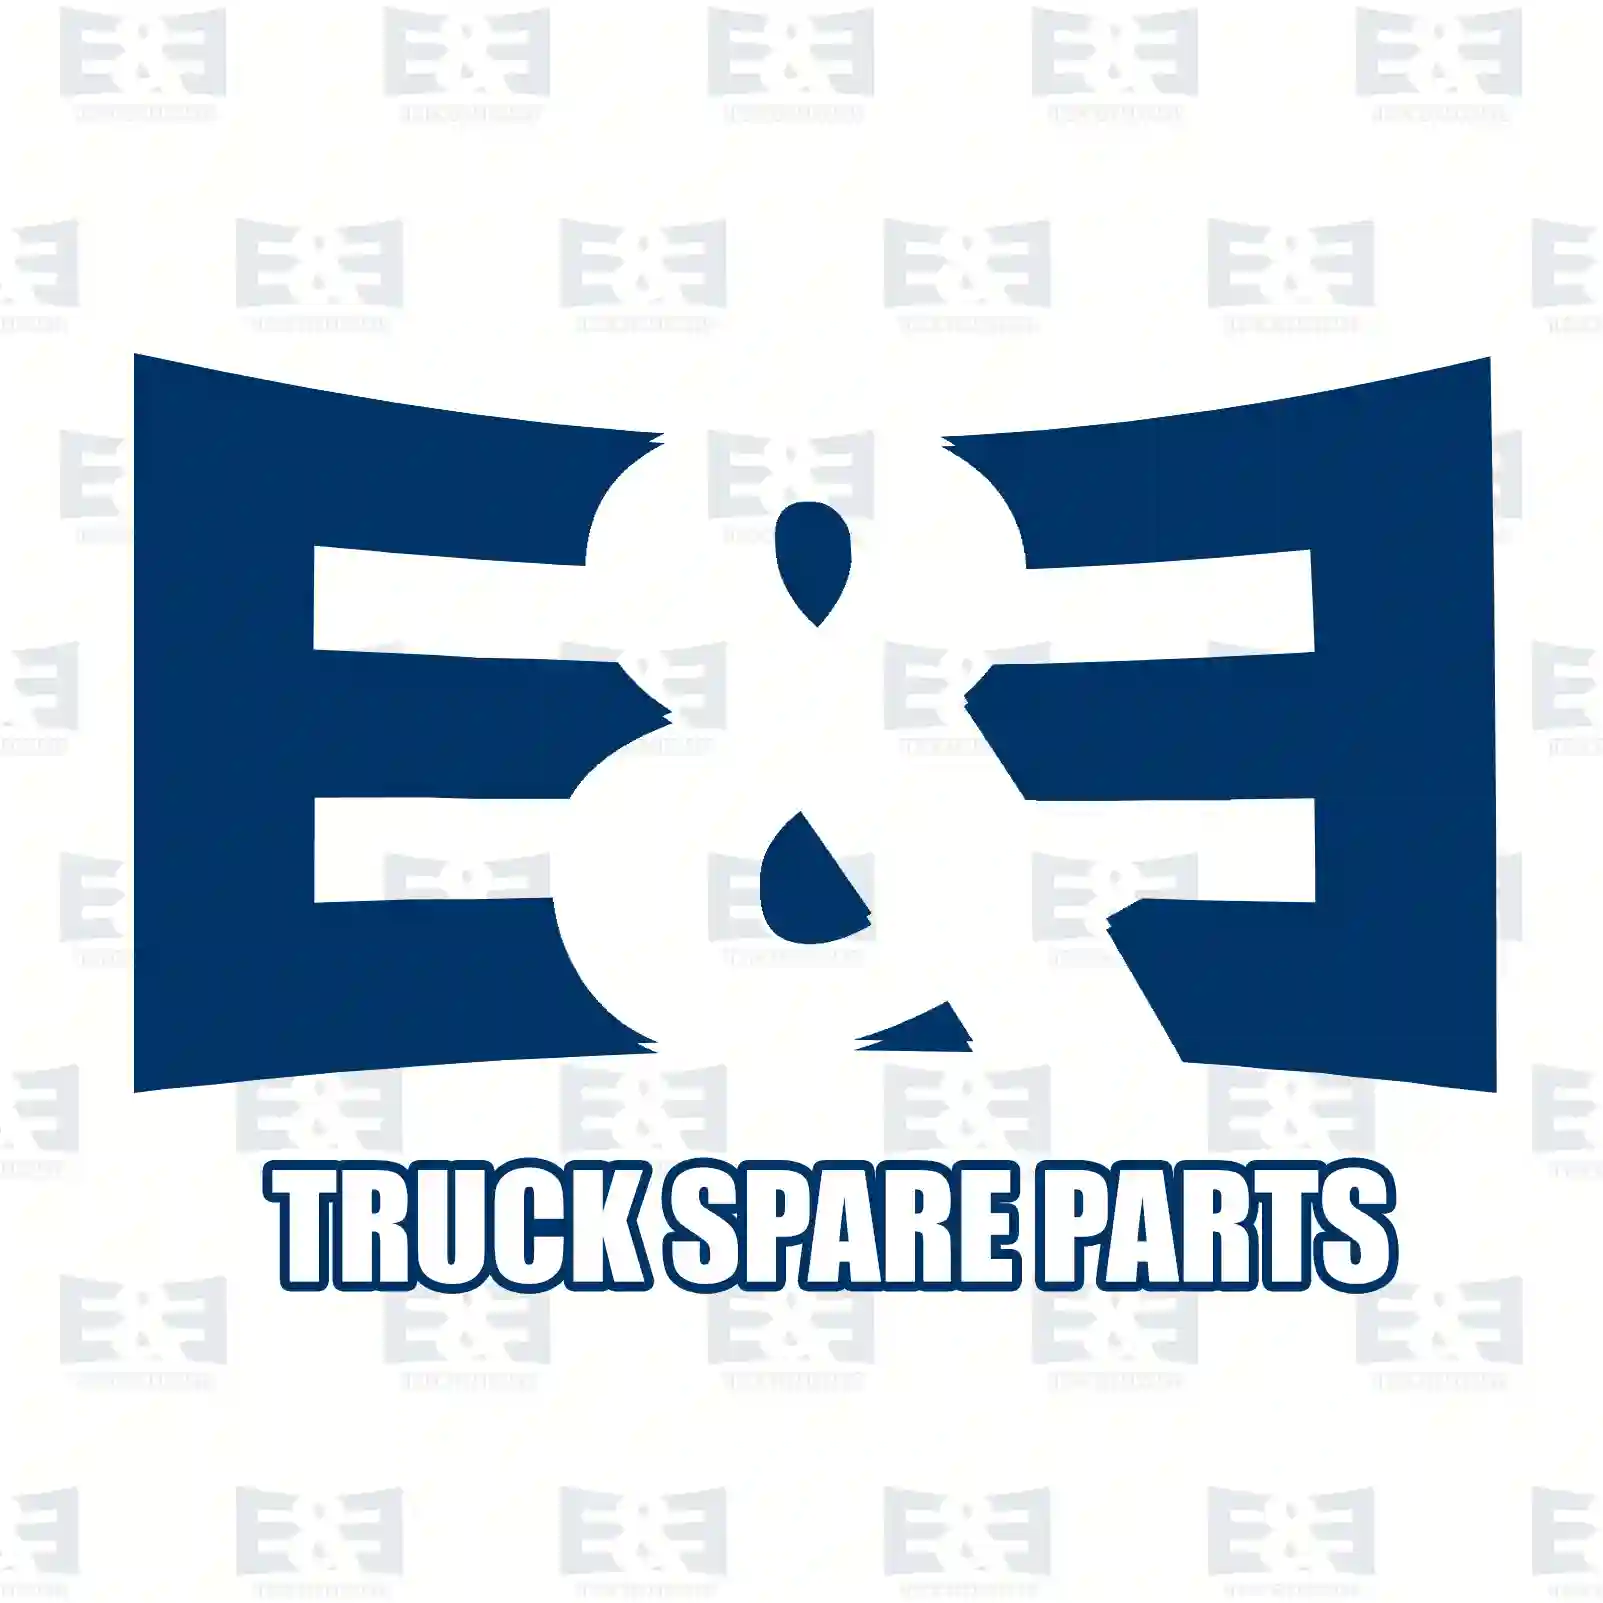 Brake disc, without screws, 2E2295756, 6014200072, 6014200272, 6014210412, 6014215012, 6014215112, , , , ||  2E2295756 E&E Truck Spare Parts | Truck Spare Parts, Auotomotive Spare Parts Brake disc, without screws, 2E2295756, 6014200072, 6014200272, 6014210412, 6014215012, 6014215112, , , , ||  2E2295756 E&E Truck Spare Parts | Truck Spare Parts, Auotomotive Spare Parts